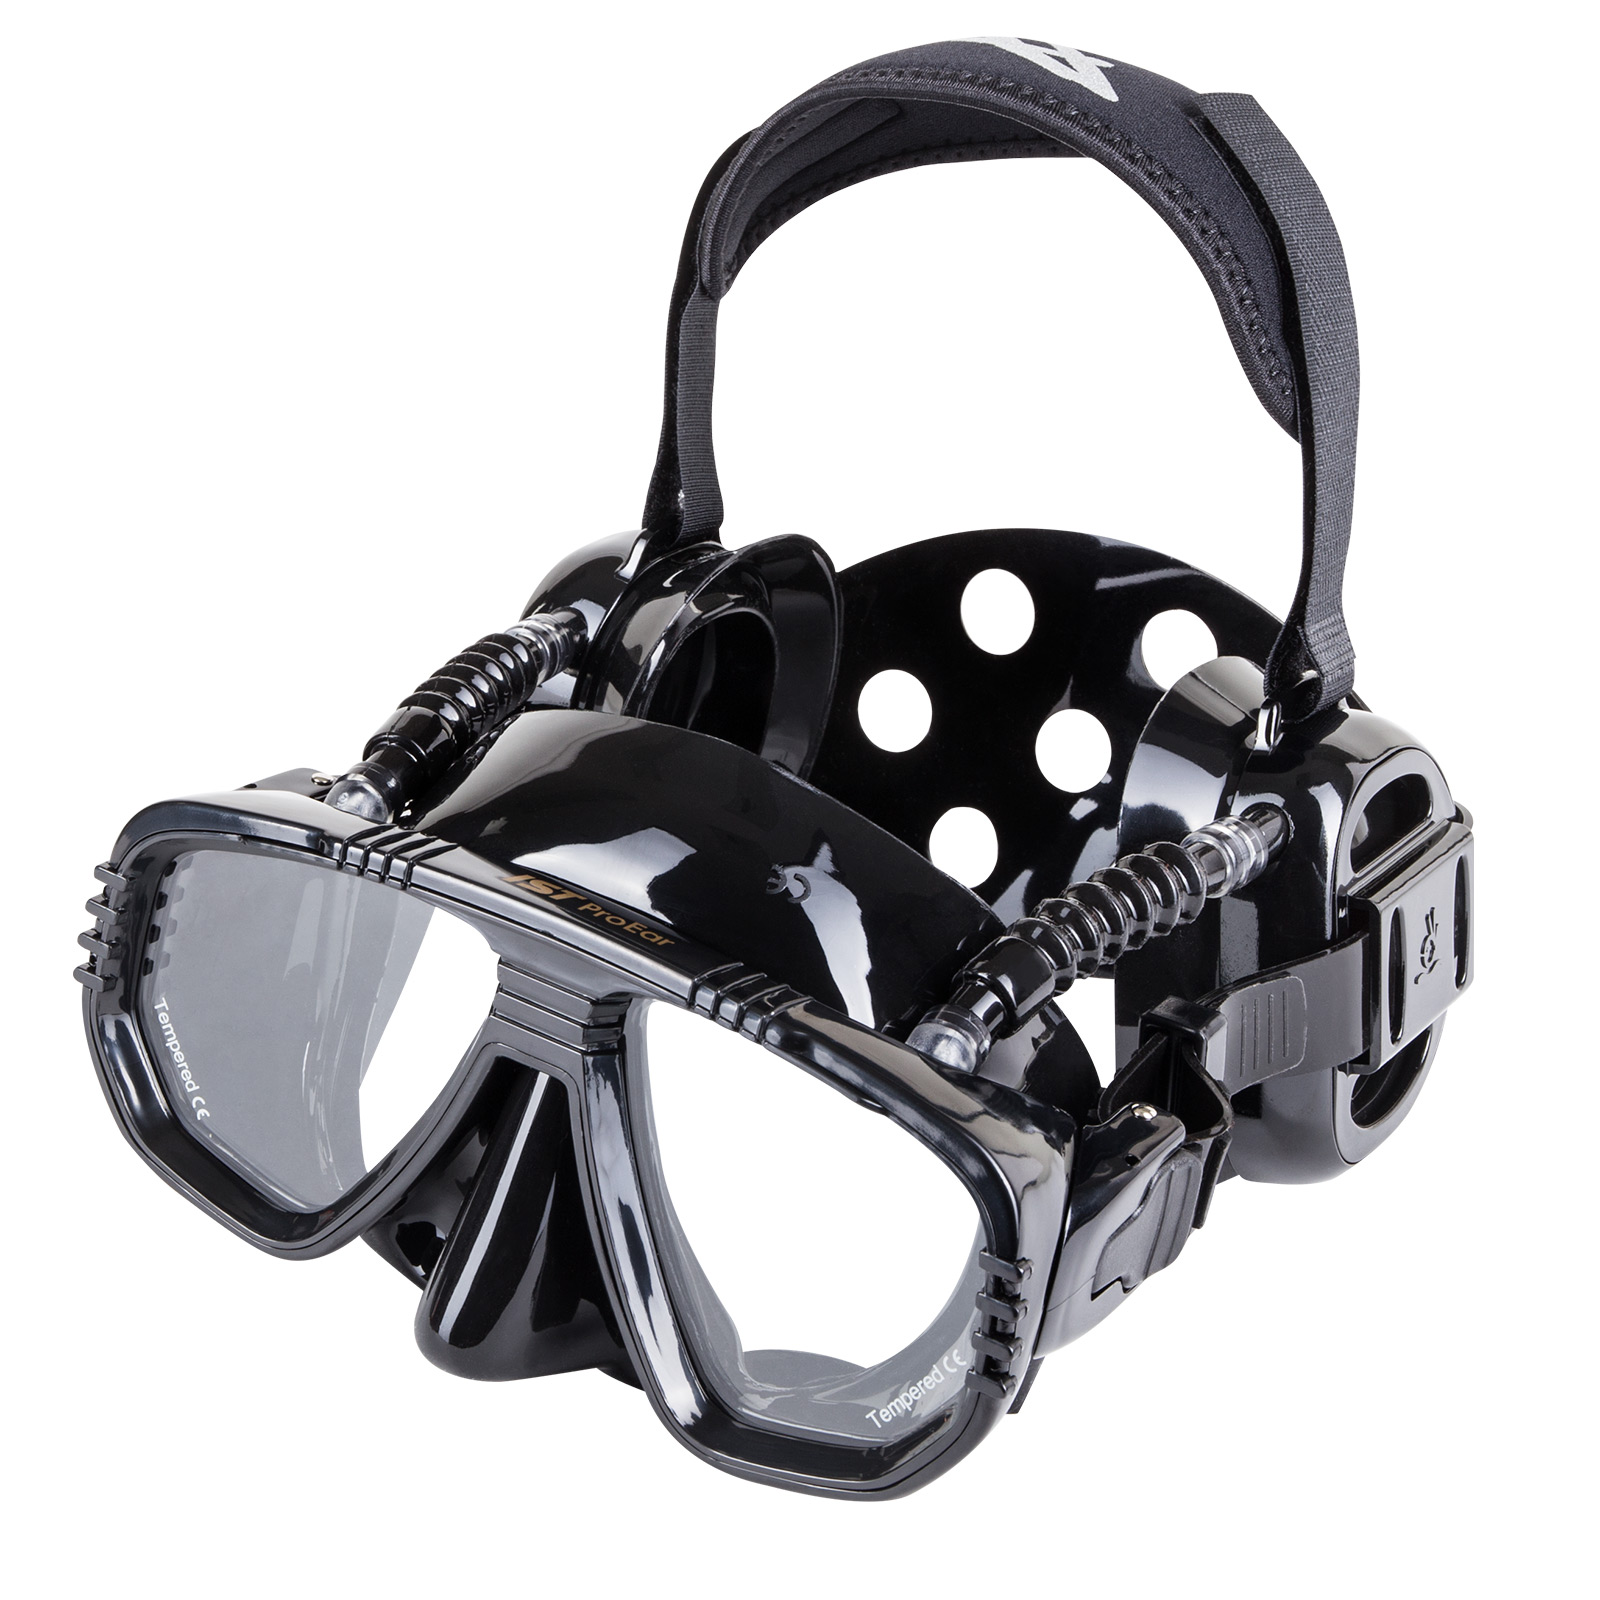 IST Pro Ear Anti Fog Mask